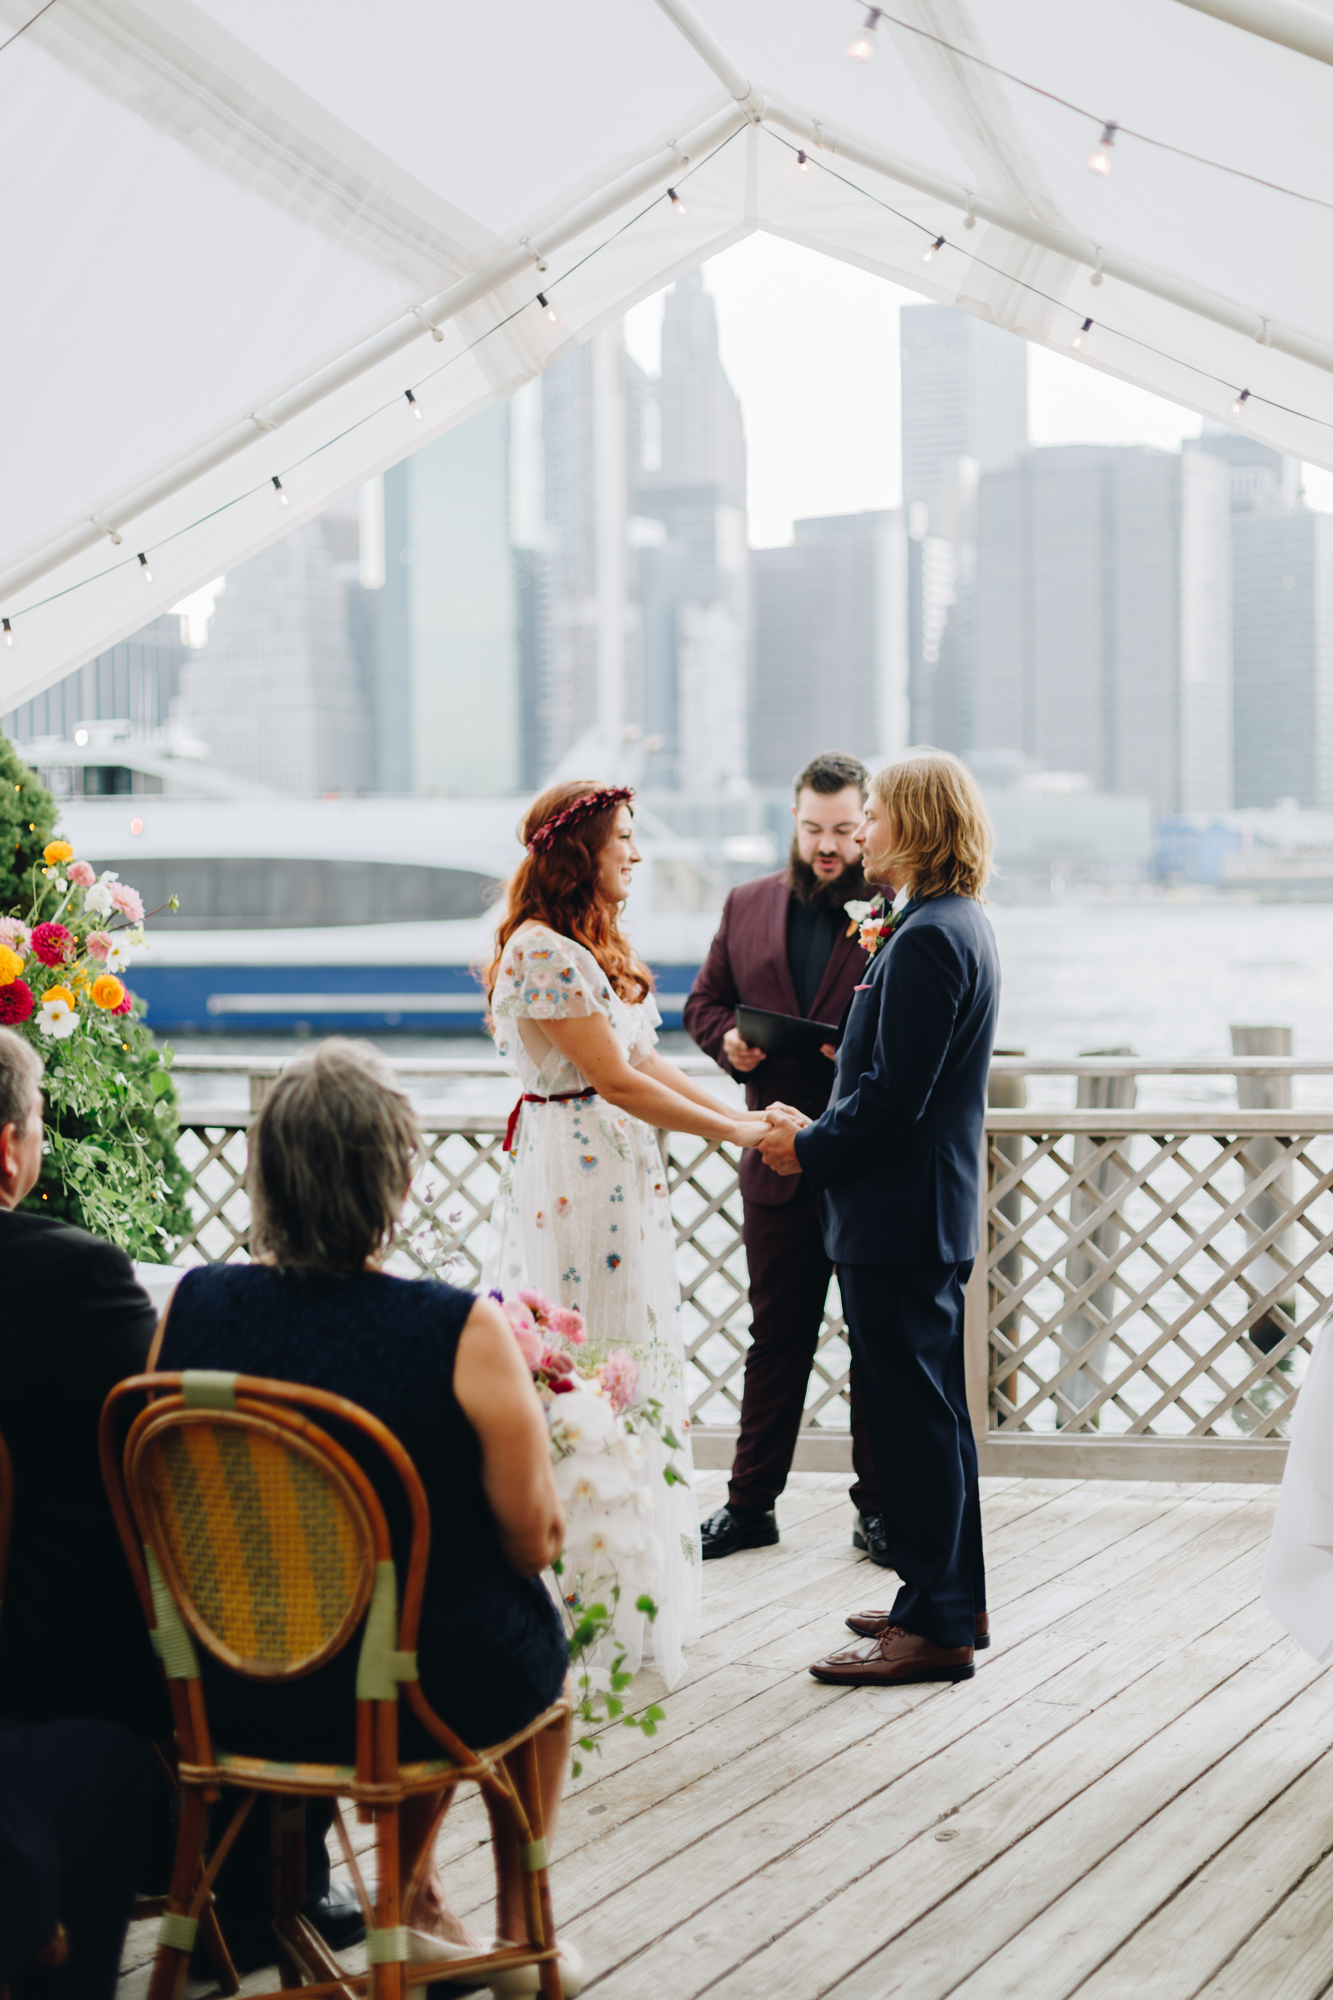 River Café micro-wedding with NYC skyline backdrop